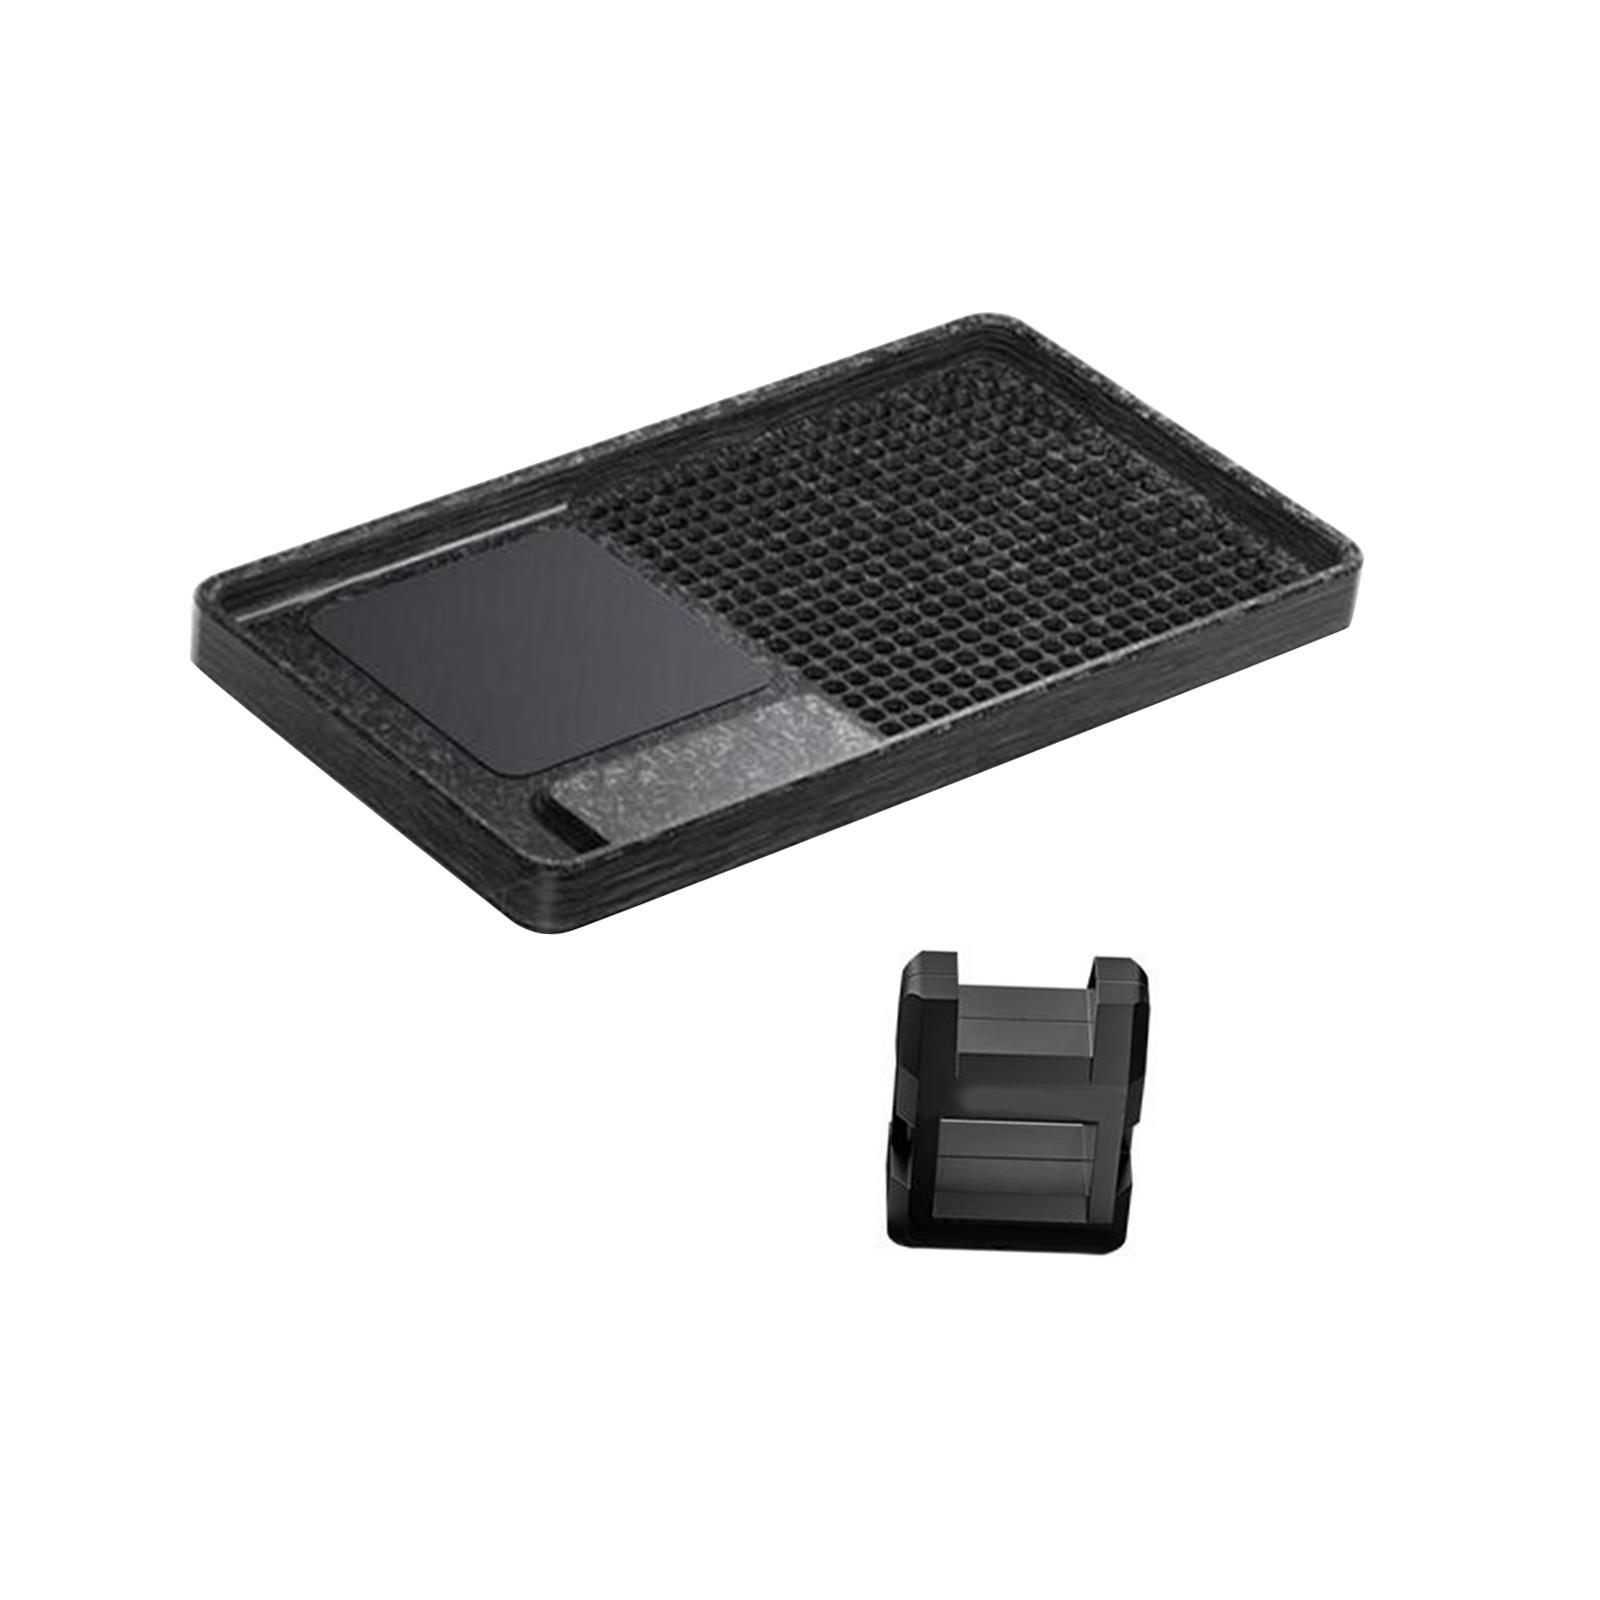 Hình ảnh Mobile Phone Screw Storage Tray universal Practical Durable Portable